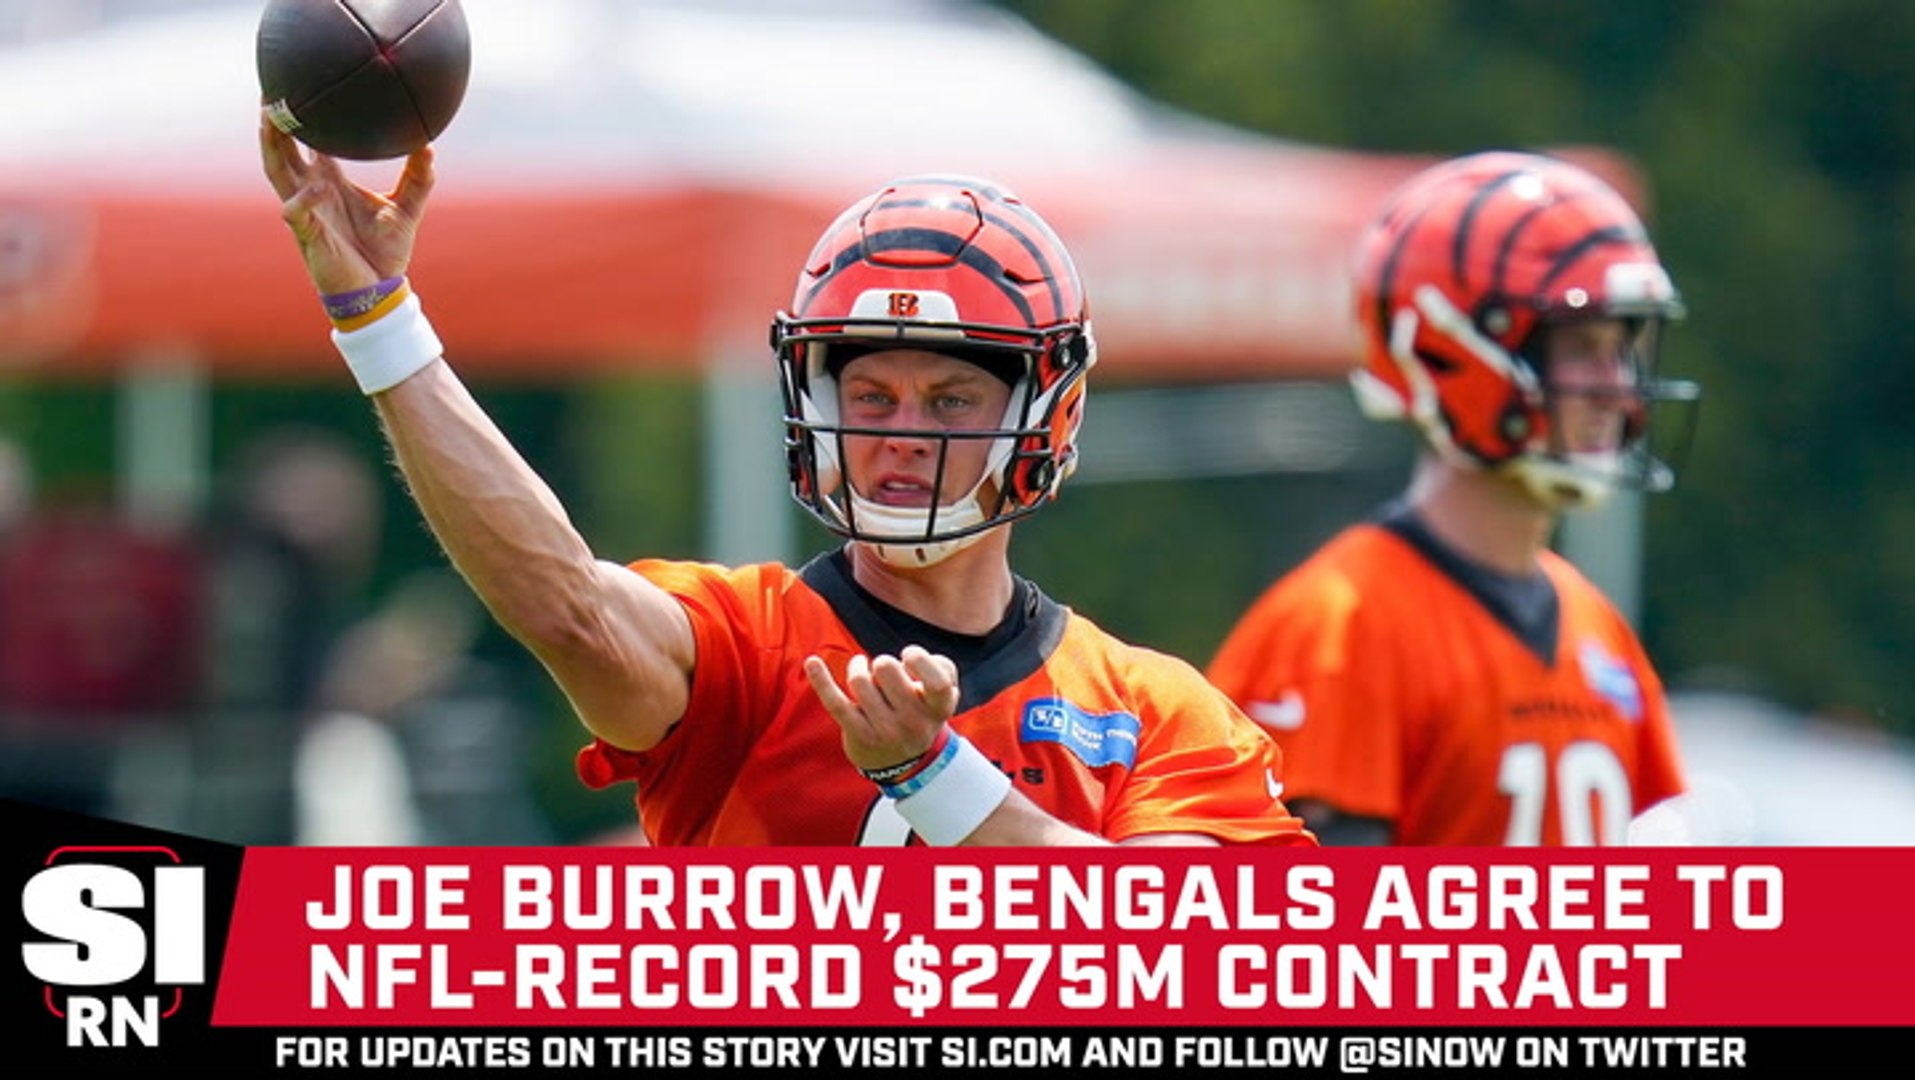 Cincinnati Bengals' Joe Burrow Agrees to NFL-Record Contract